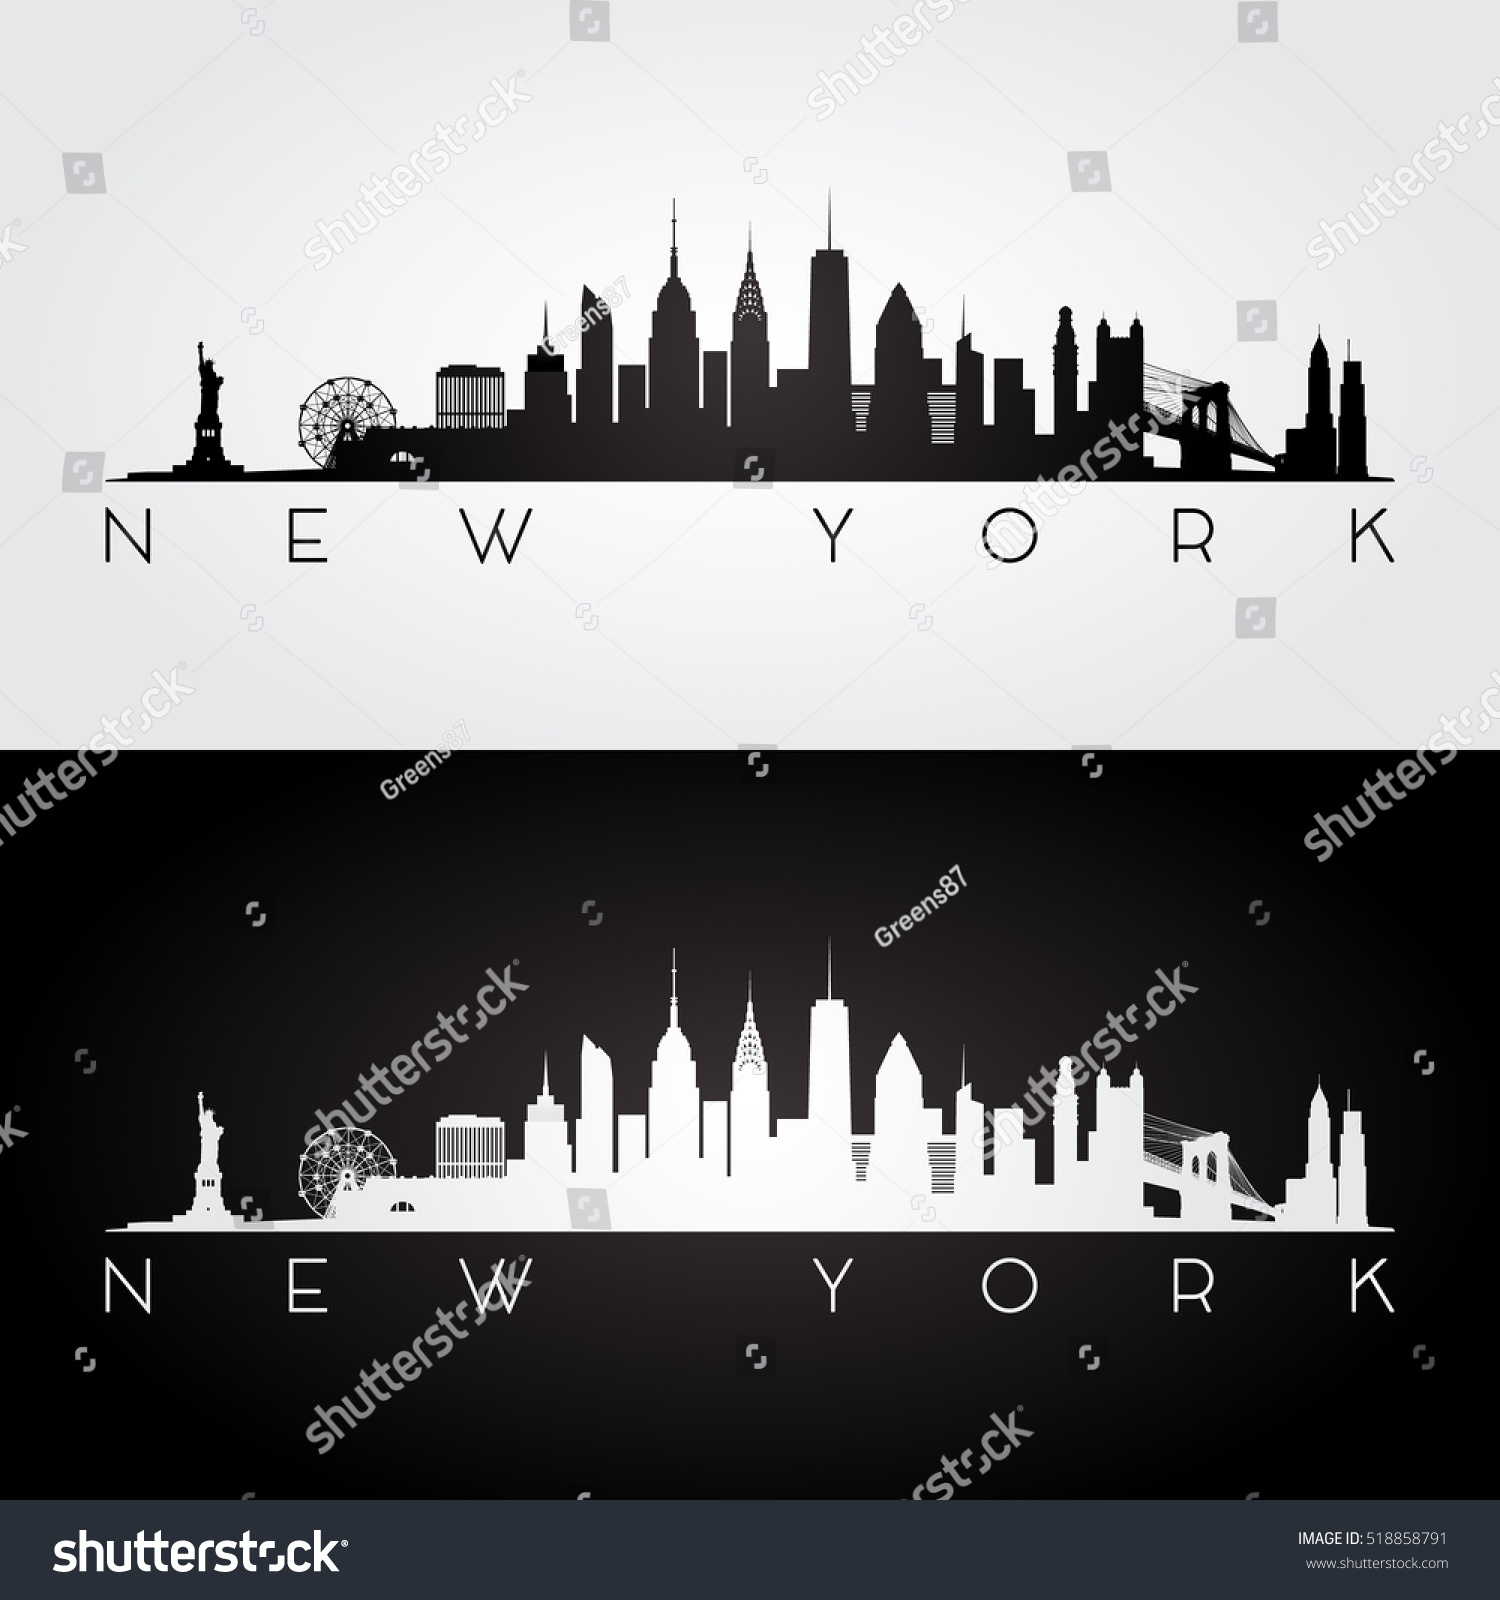 SVG of New York USA skyline and landmarks silhouette, black and white design, vector illustration. svg